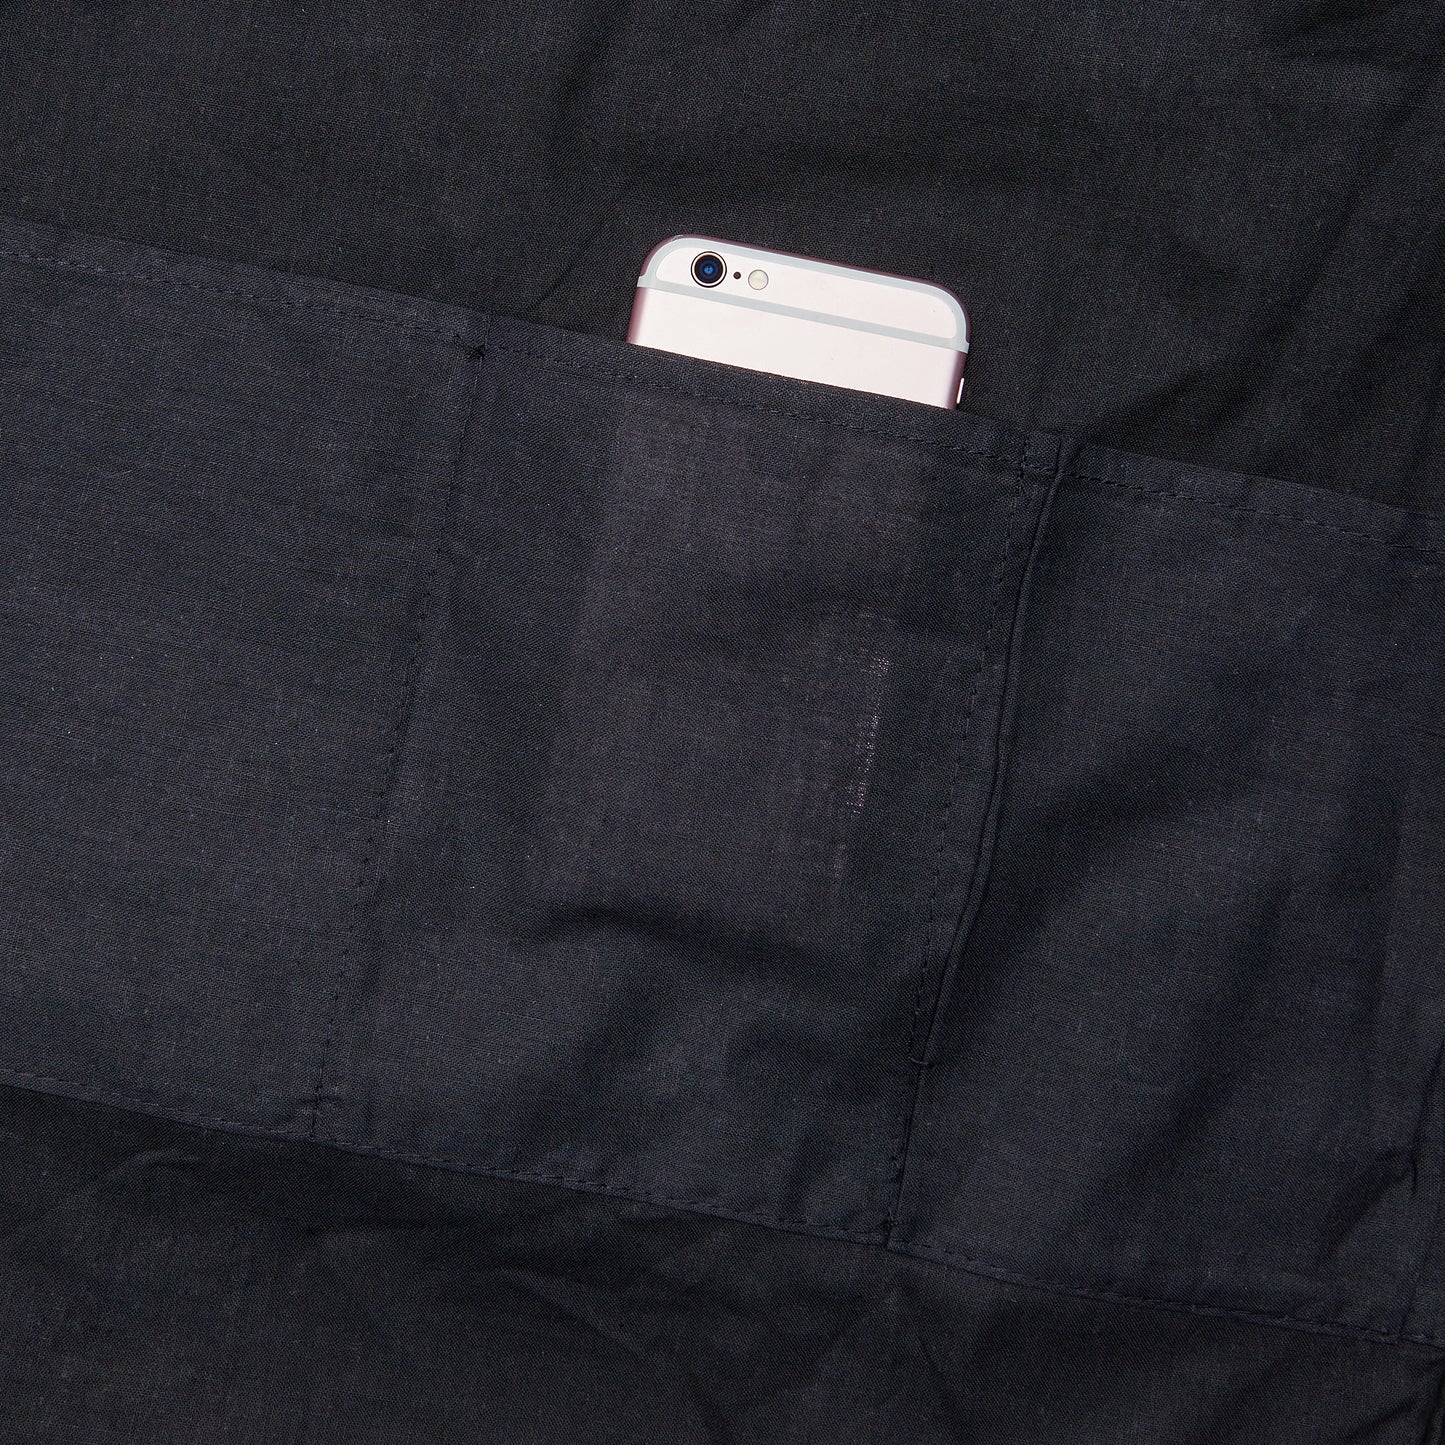 Silver Grey: Denim-Inspired, Contemporary Fabric Design - Adjustable Tote Bag (AOP)